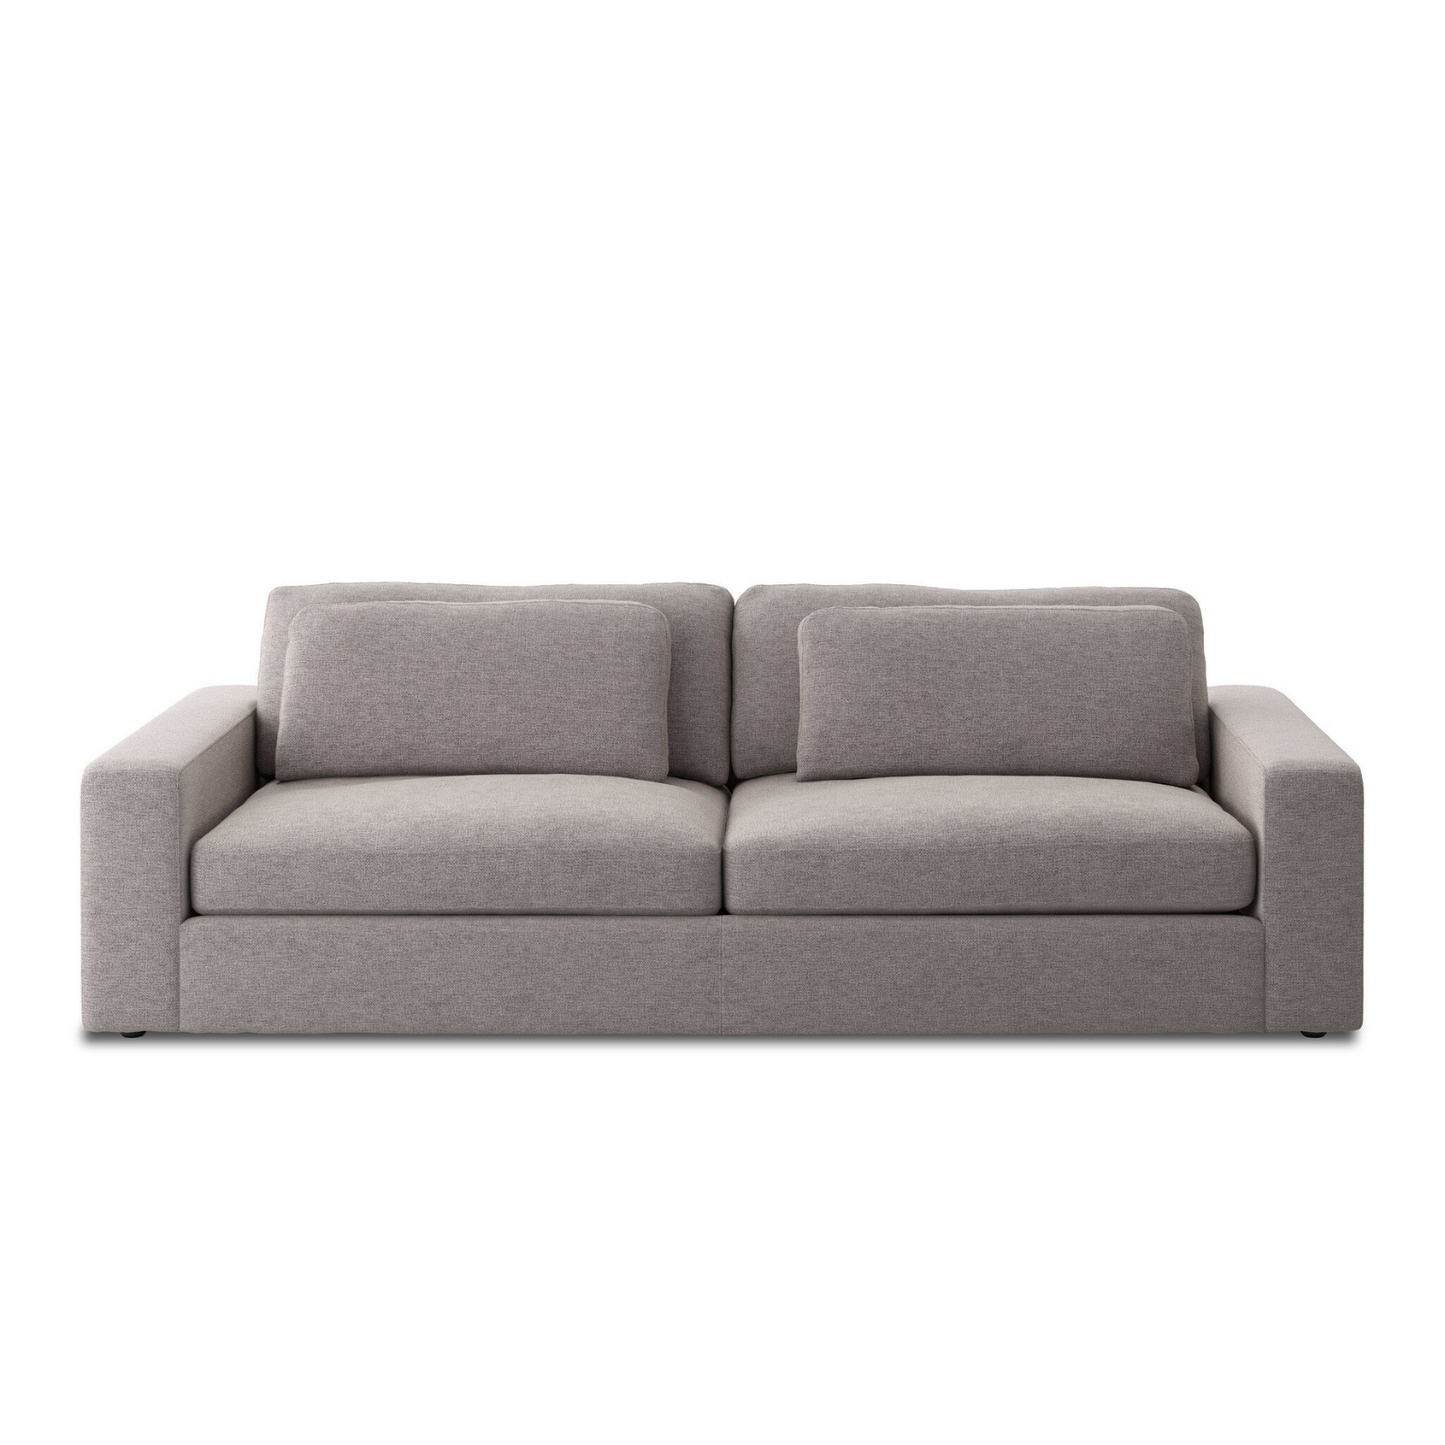 Bailow Sofa